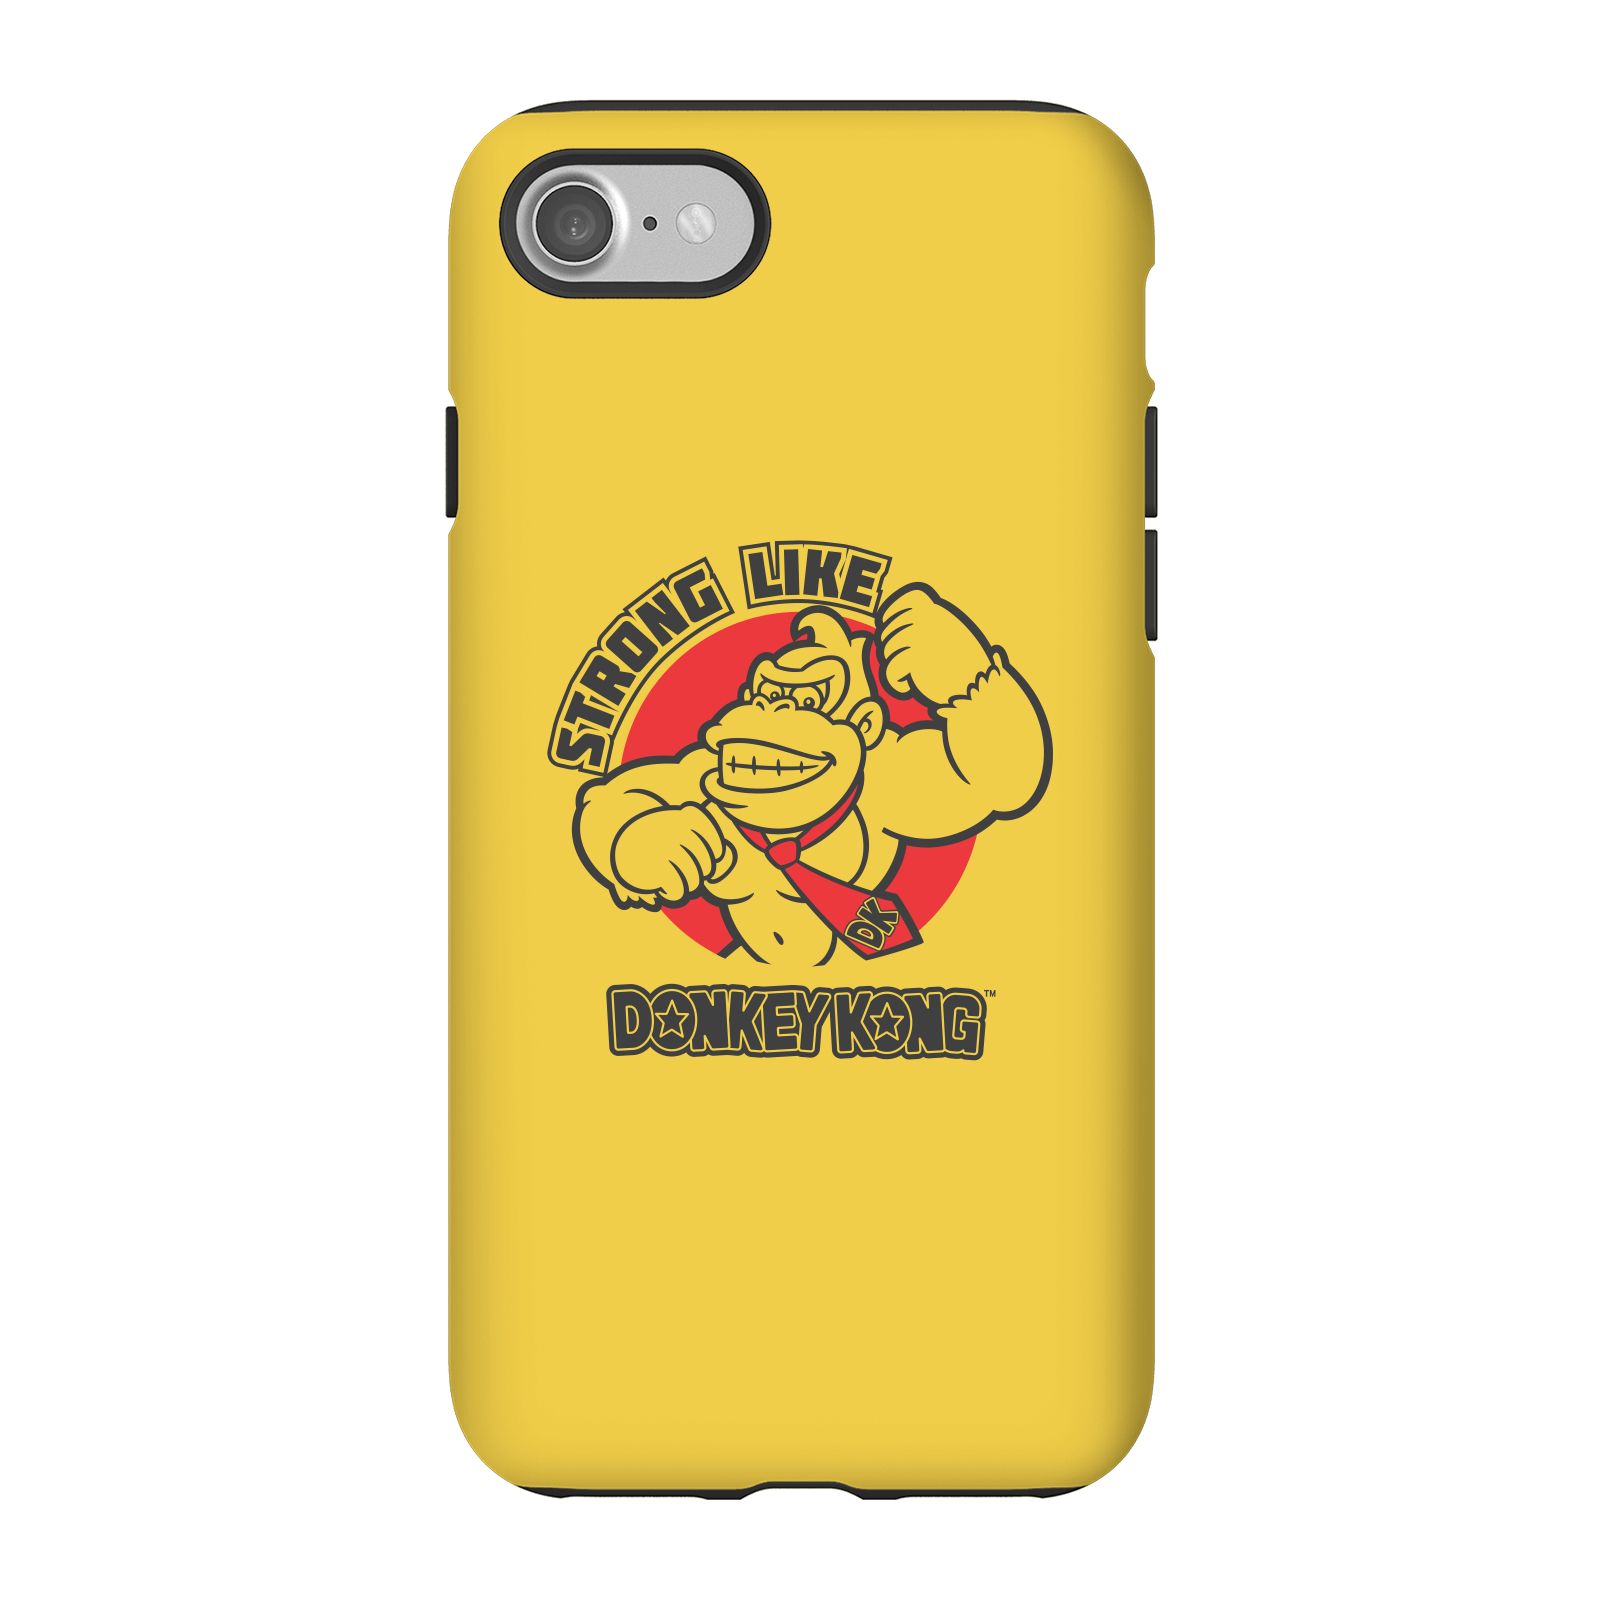 Nintendo Donkey Kong Strong Like Donkey Kong Phone Case - iPhone 7 - Tough Case - Gloss